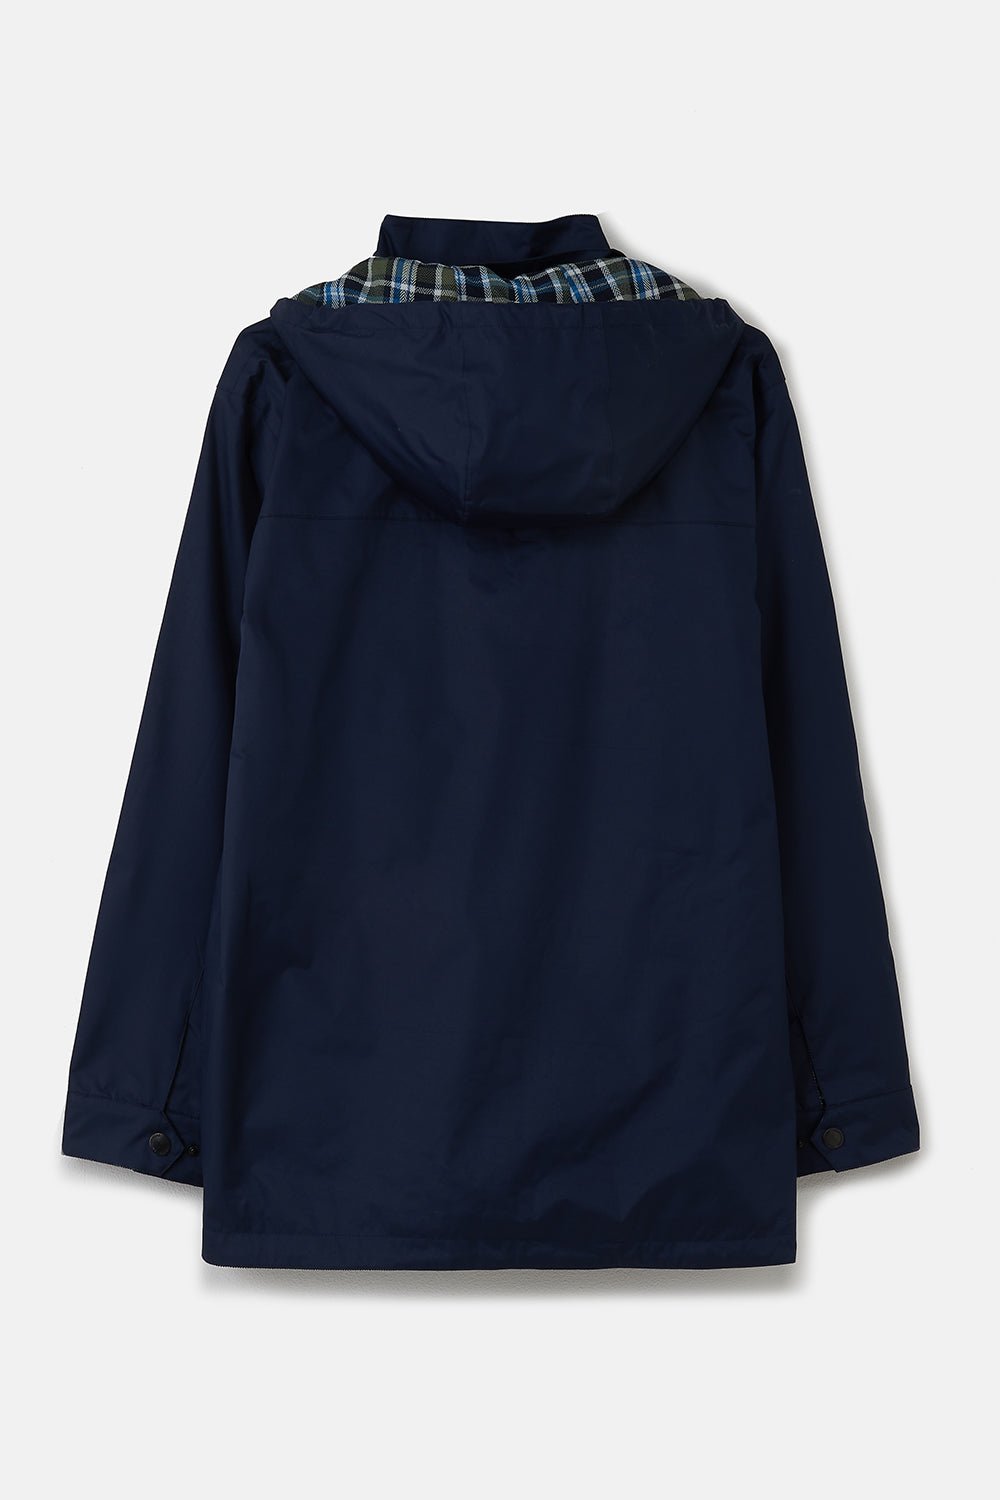 Oxford Raincoat - Navy